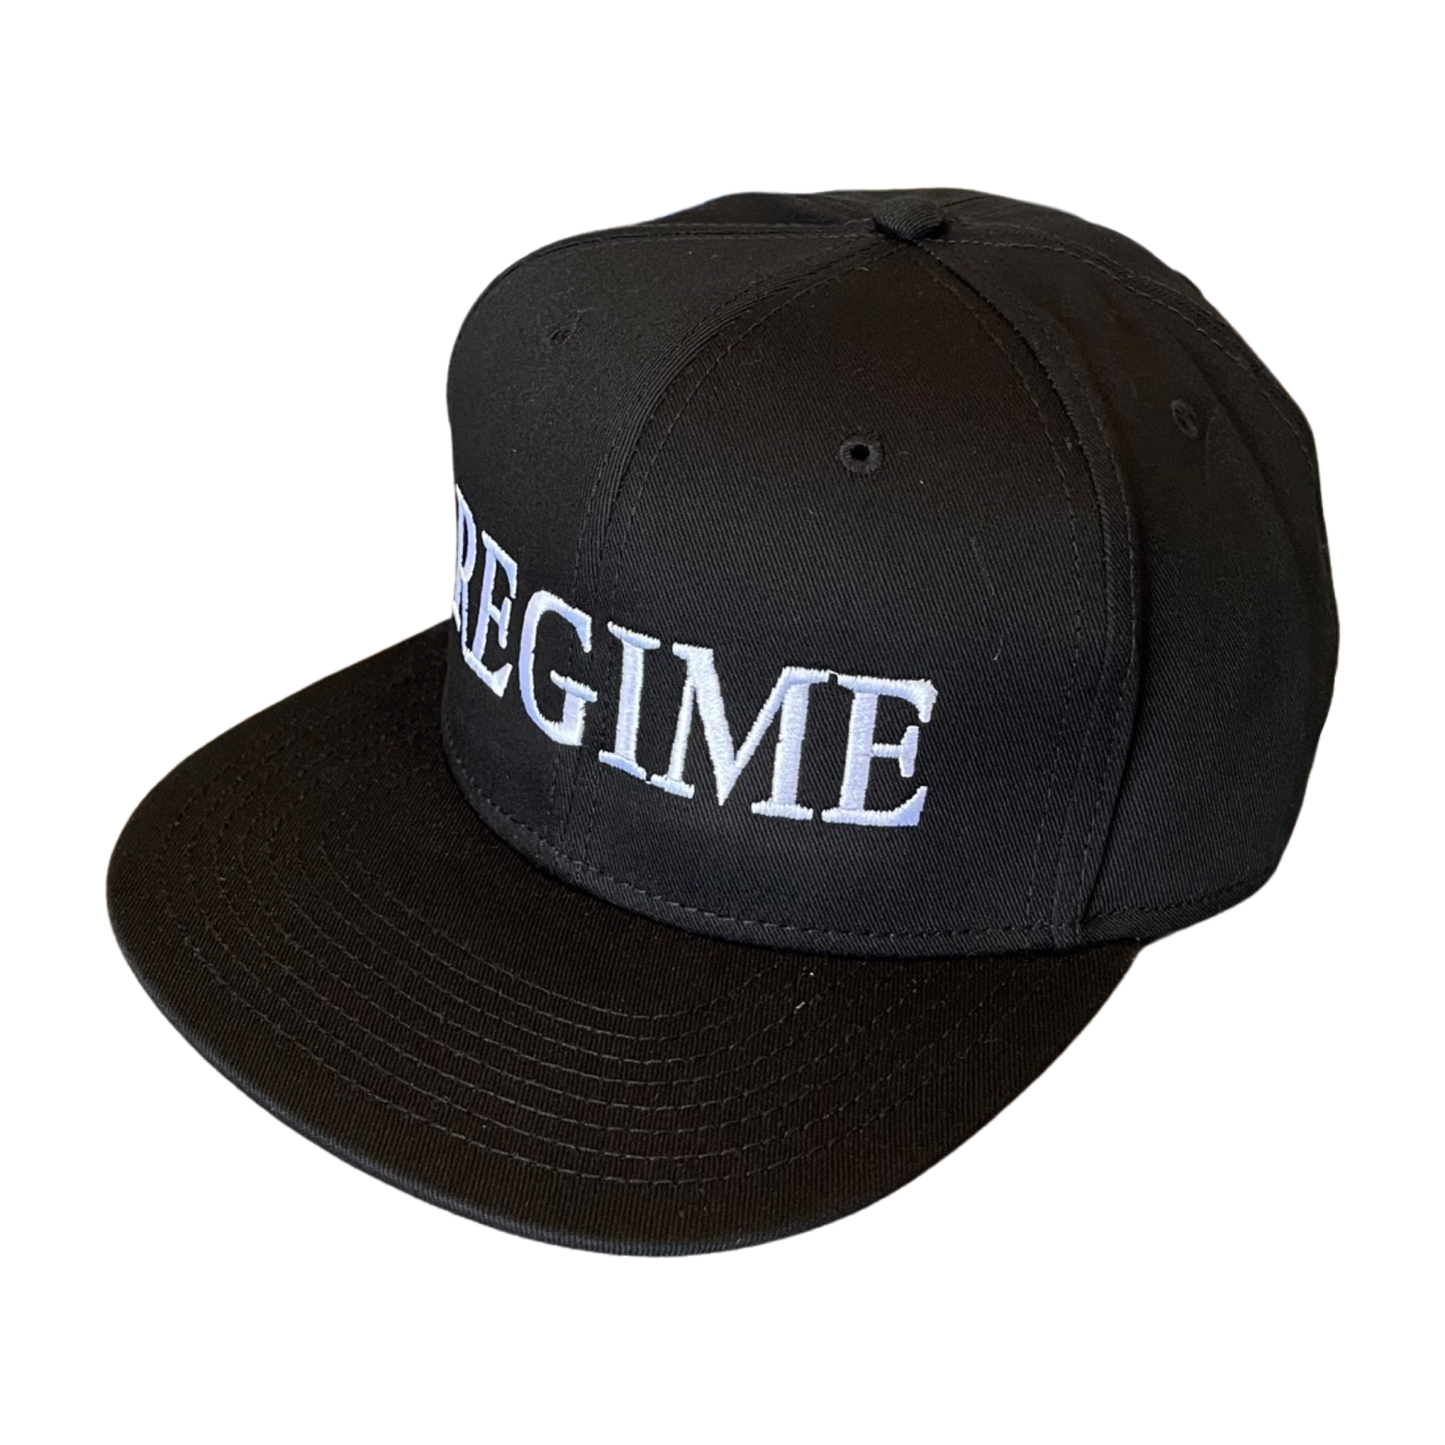 Regime Snapback Hat - White on Black